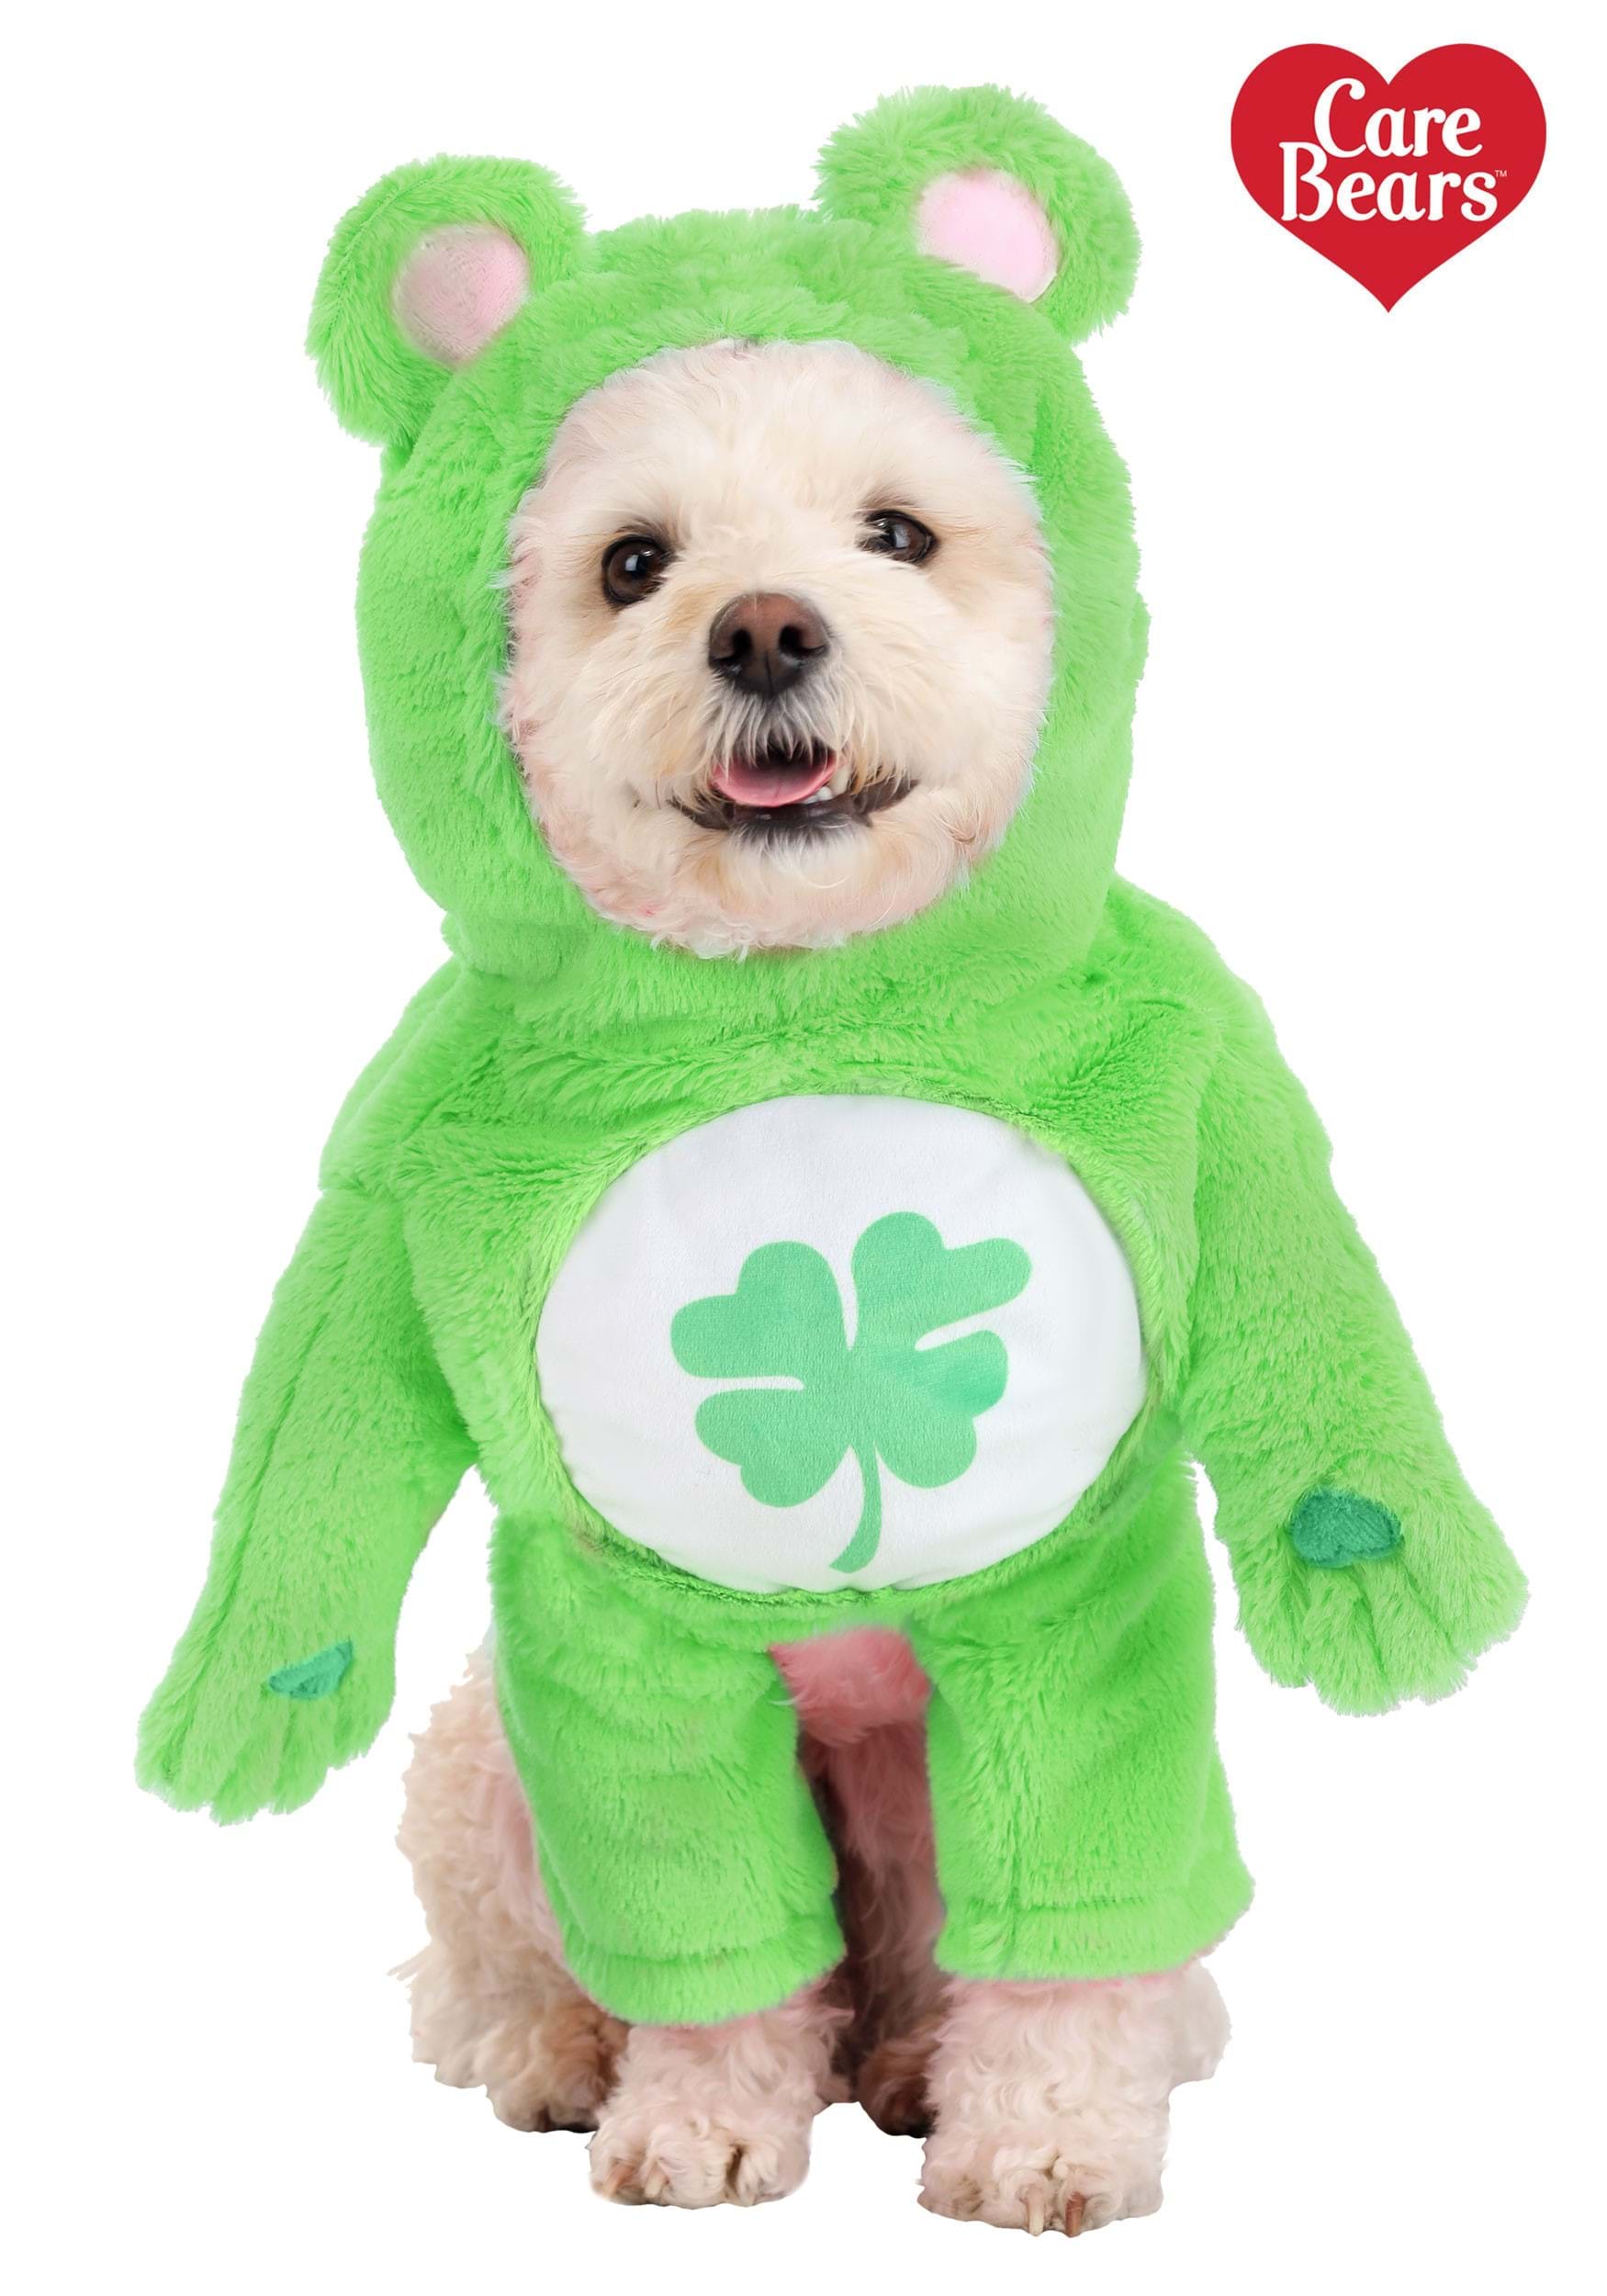 Good Luck Bear Care Bears Dog Costume